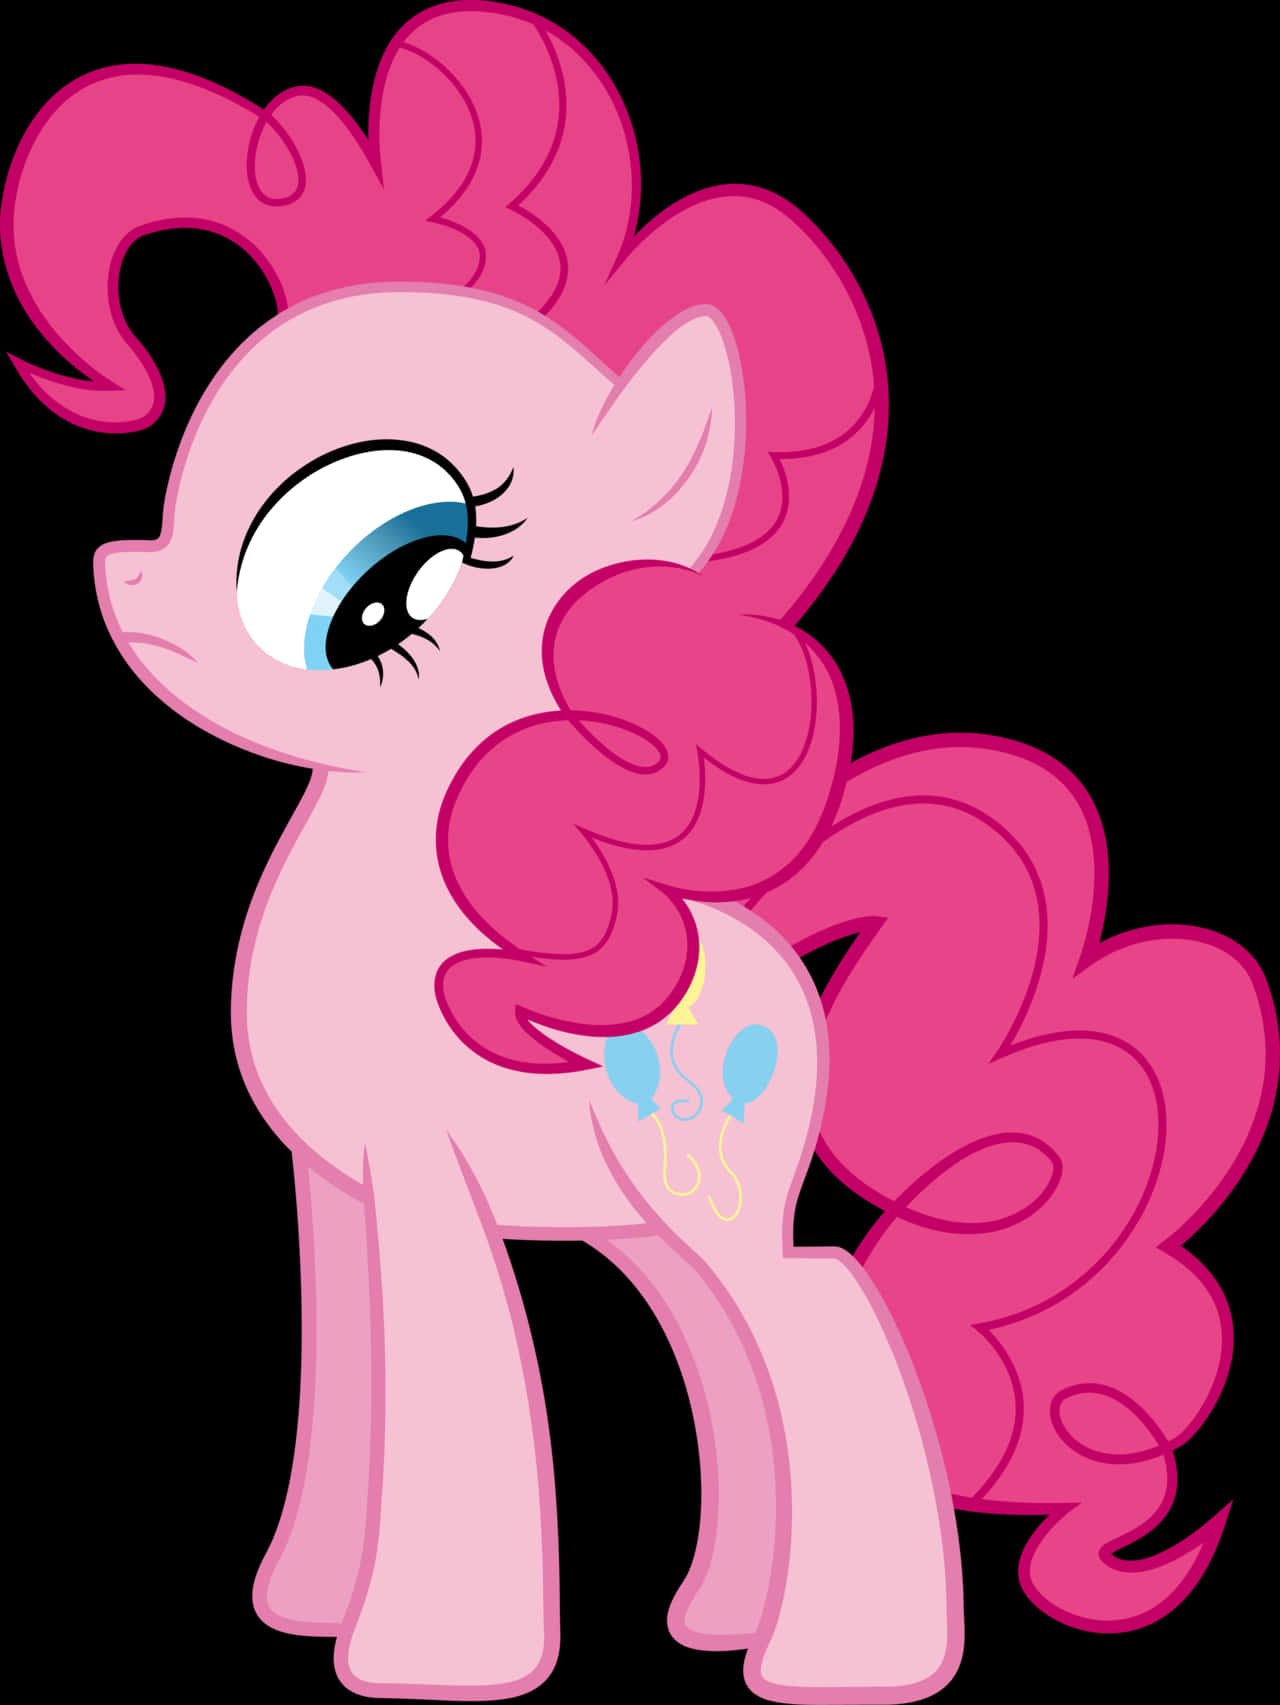 Pinkie Pie dances joyfully in a tutu.